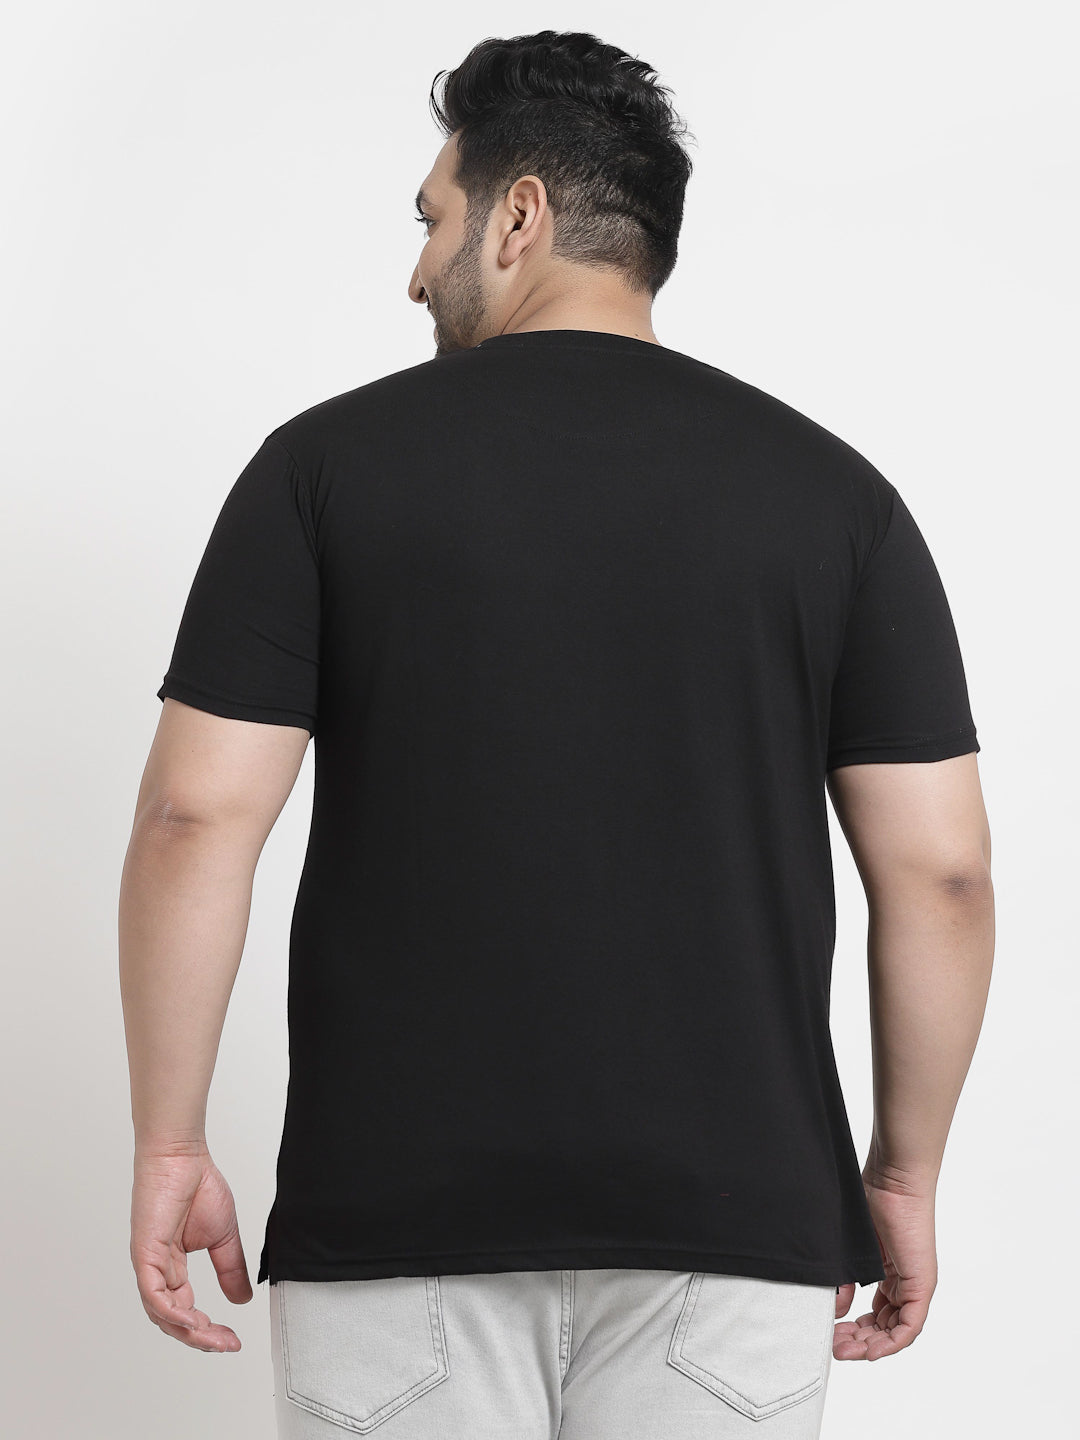 Plus Size Black Printed Cotton T-shirt